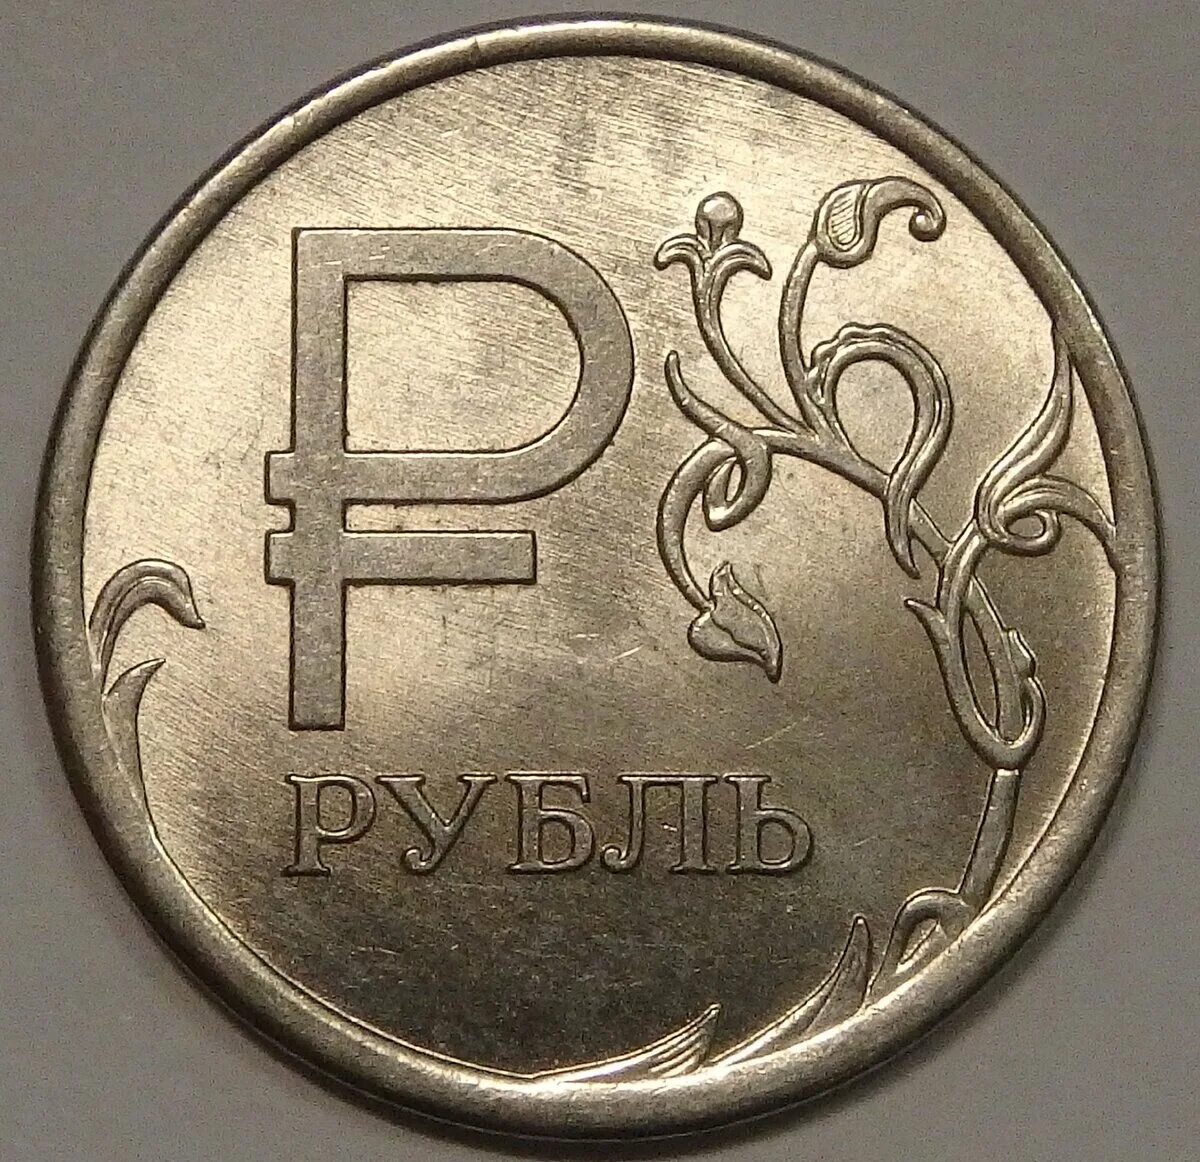 Монета знак рубля. Знак рубля. Символ рубля. Изображение рубля. Монета 1 рубль.